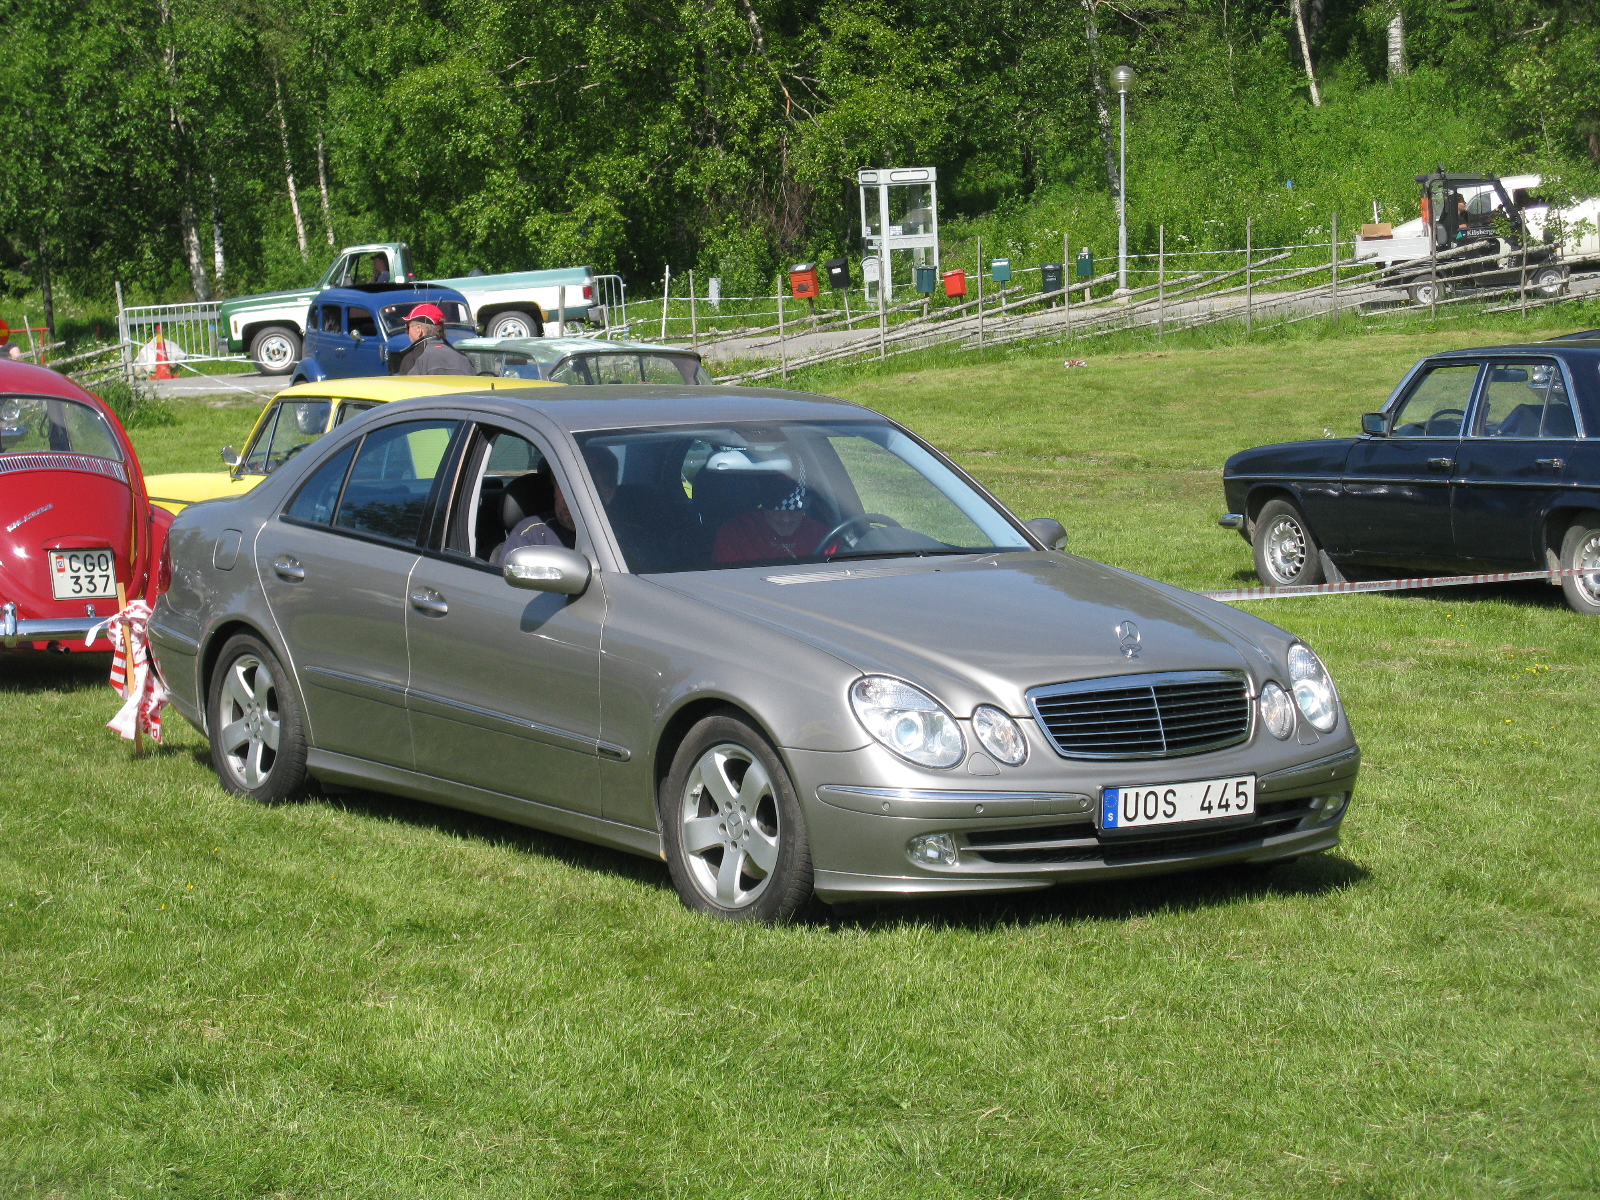 Mercedes-Benz W 211 - Wikimedia Commons